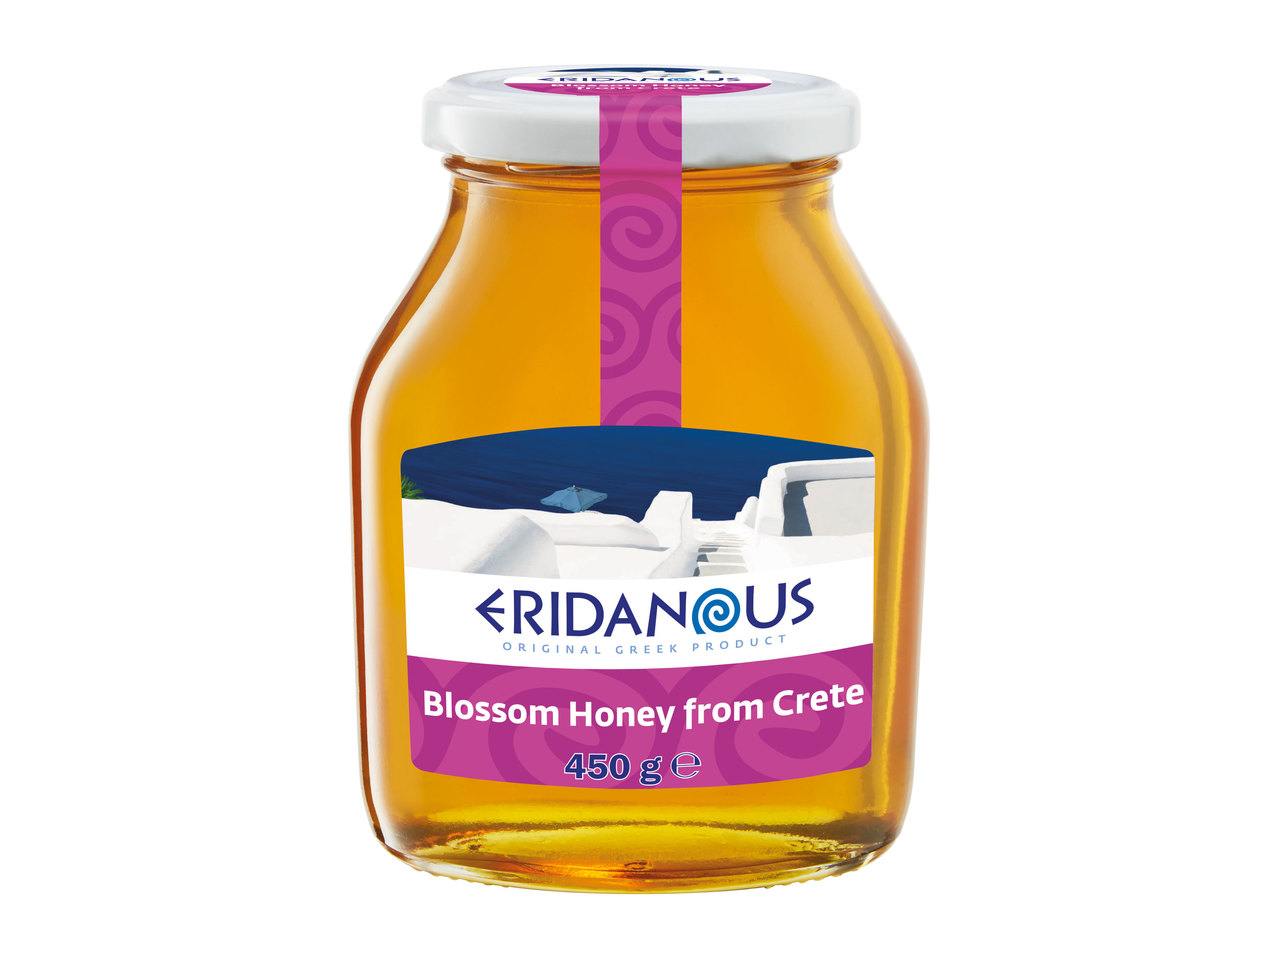 Eridanous Blossom Honey from Crete1